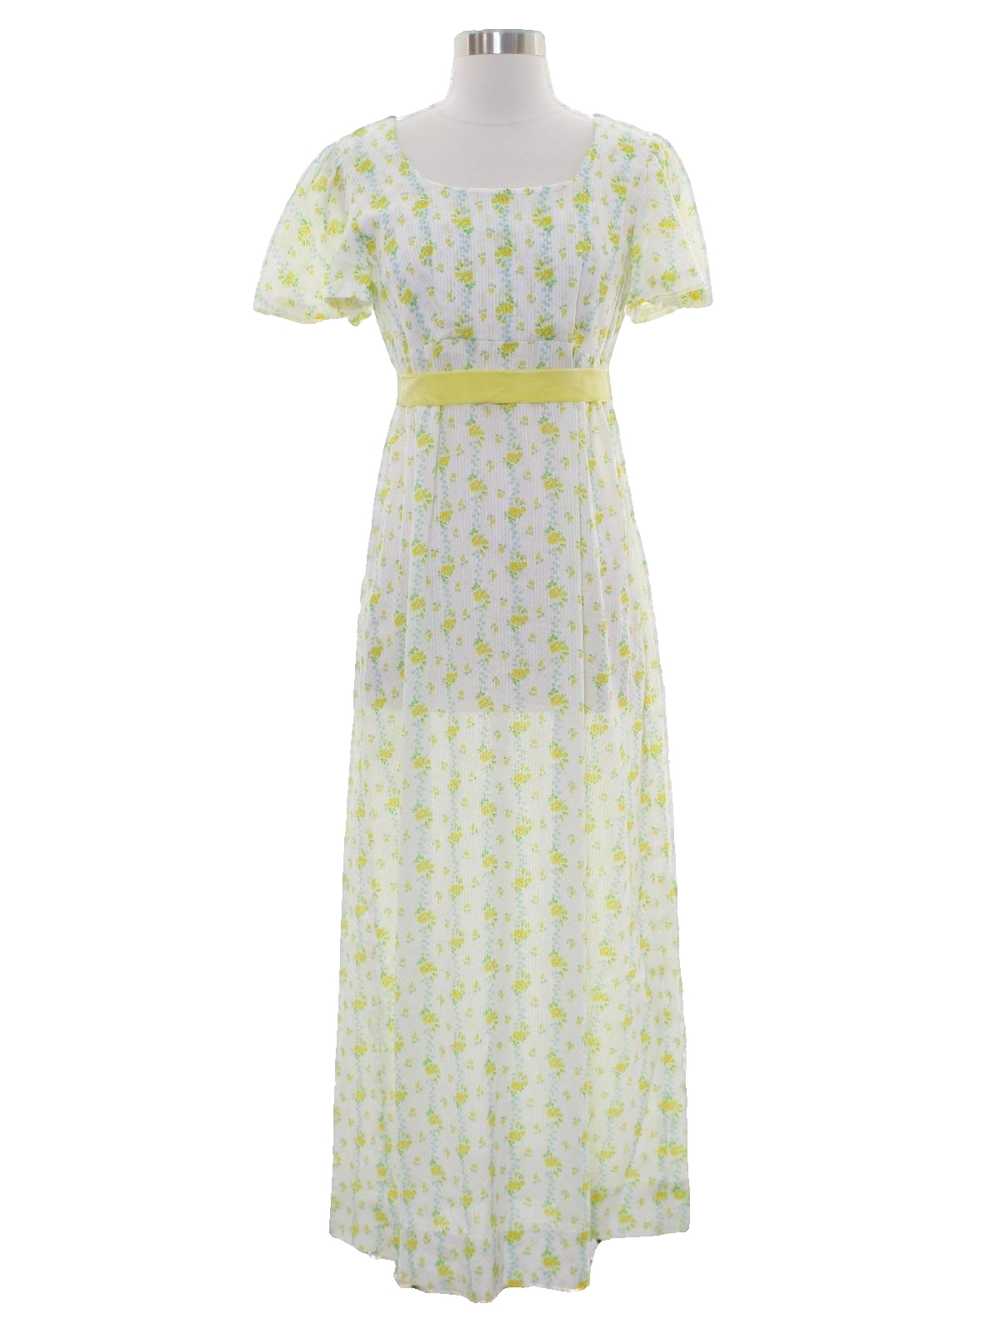 1960's Hippie Maxi Dress - image 1